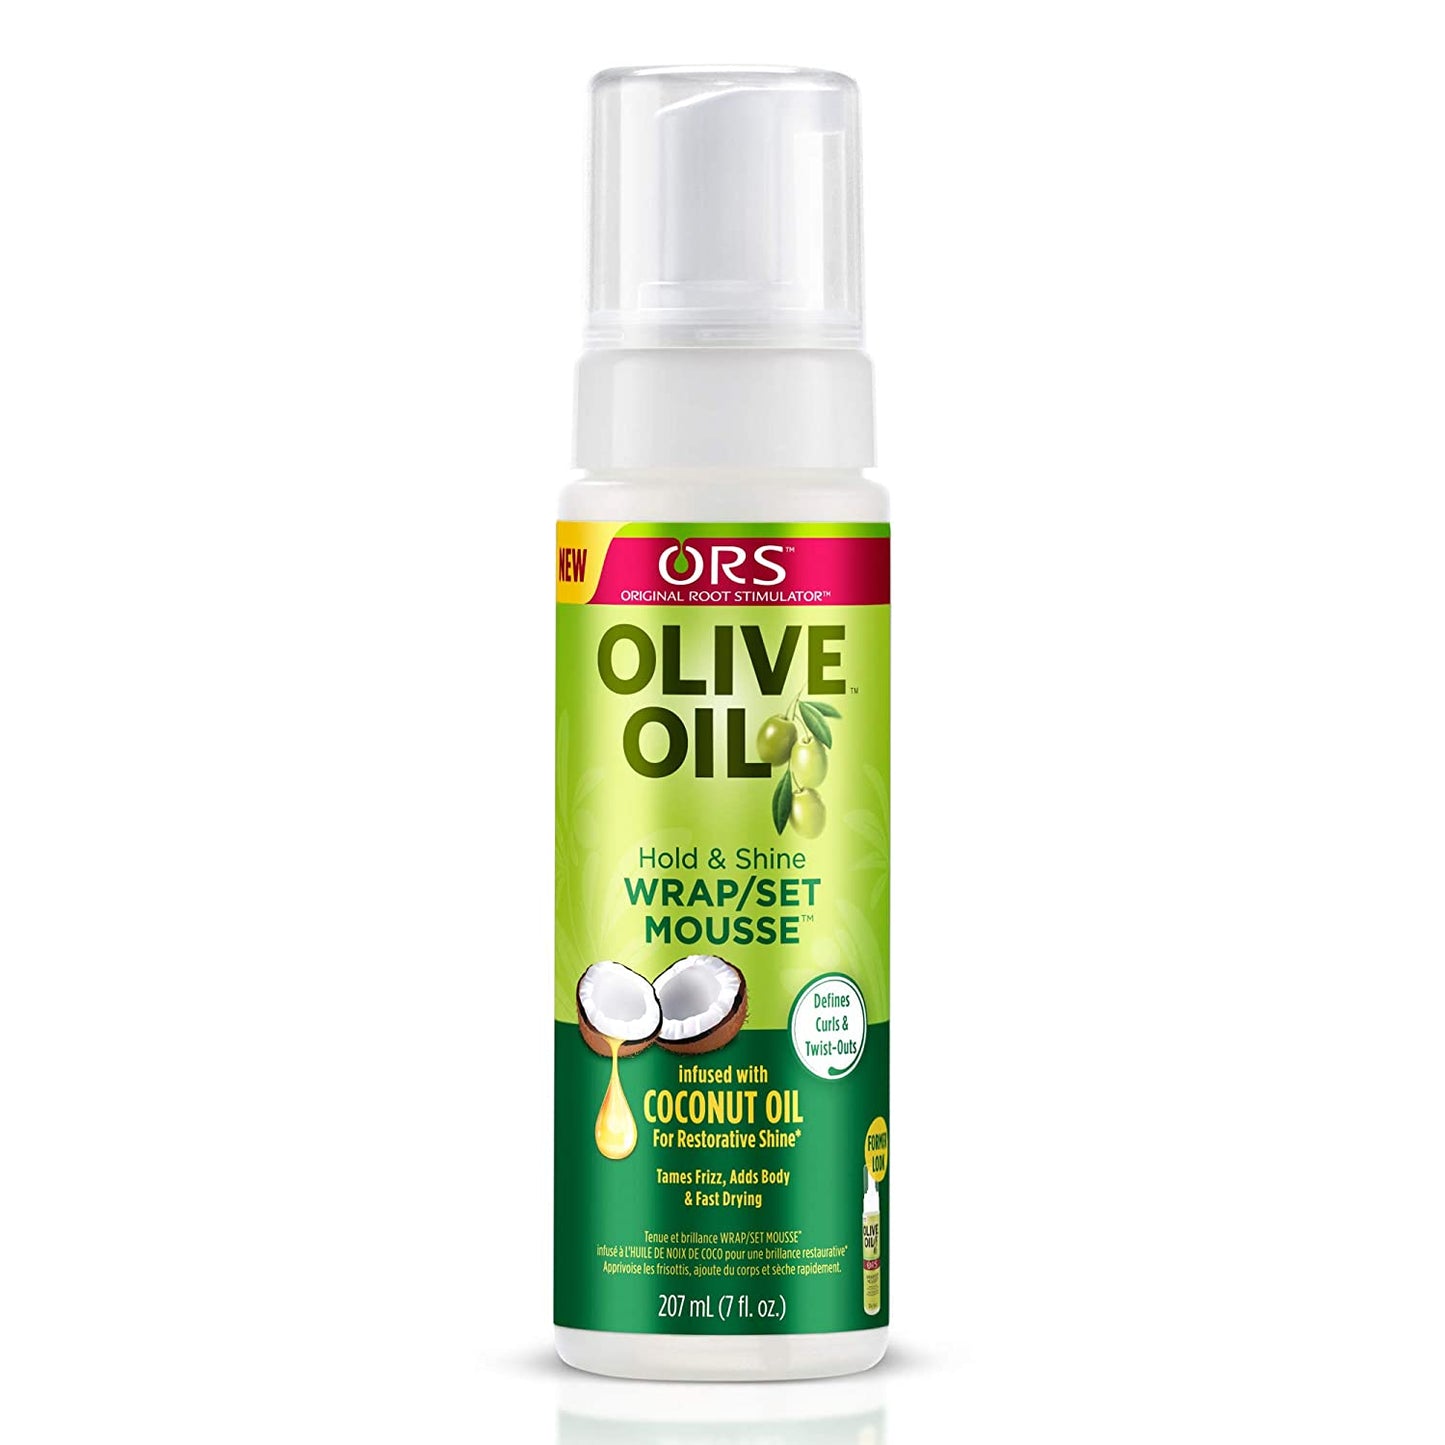 ORS Olive Oil Hold & Shine Wrap/Set Mousse, 7 oz.